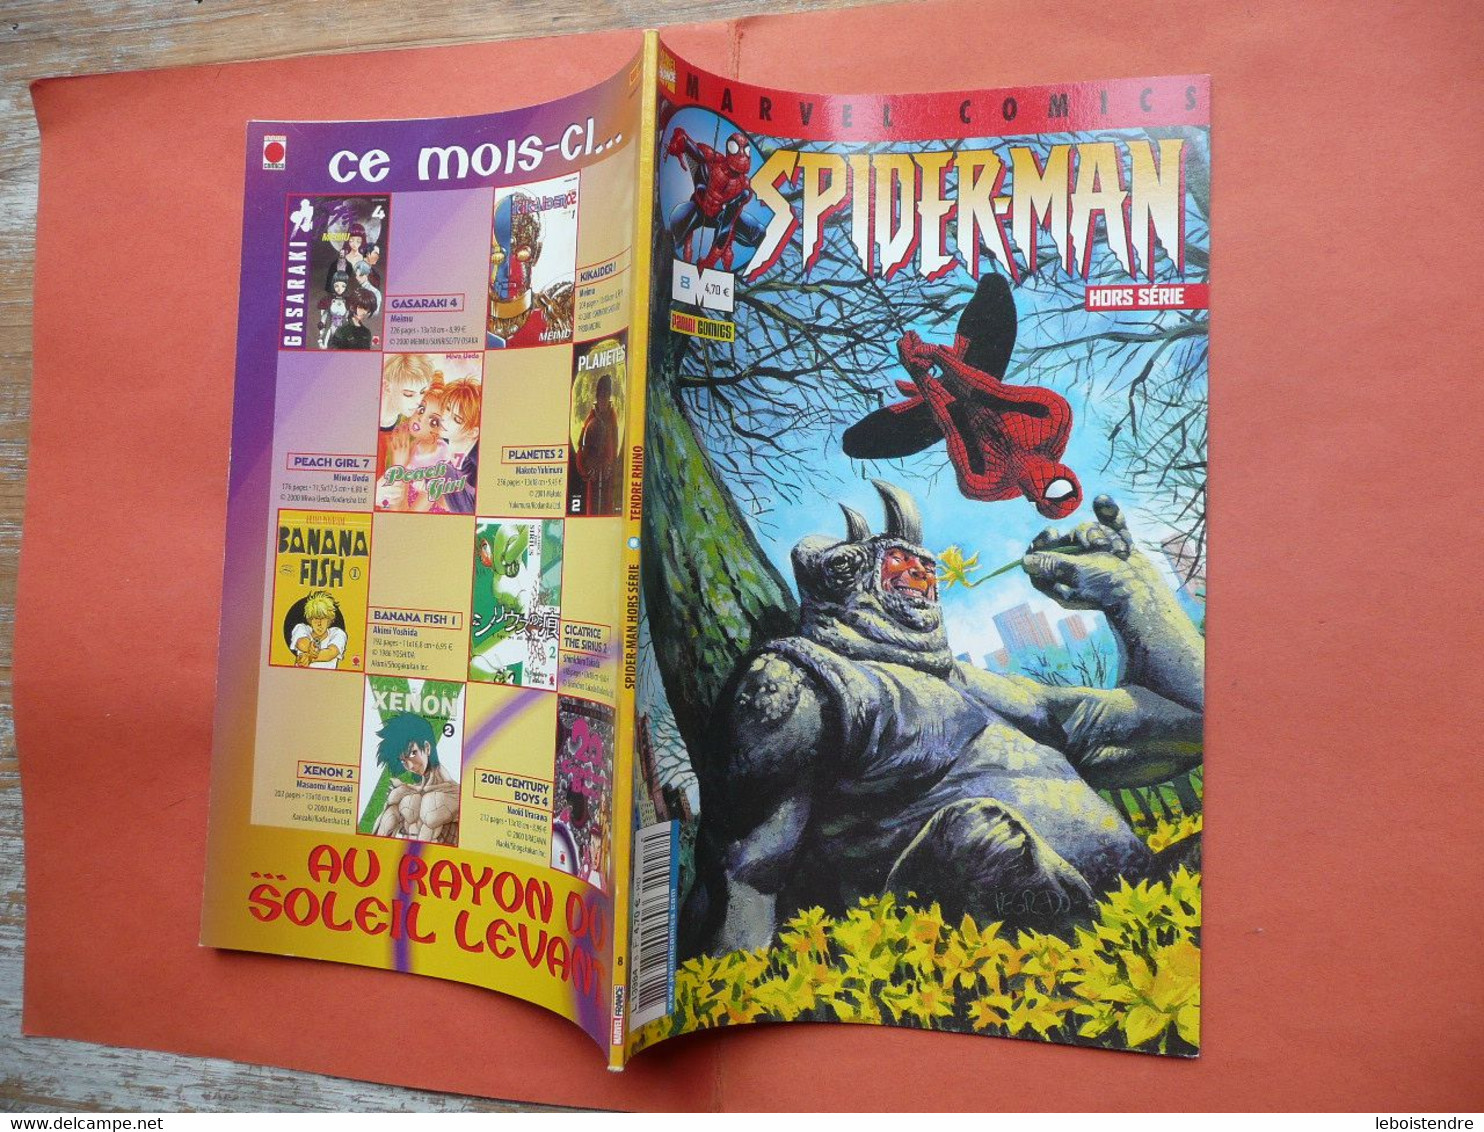 SPIDERMAN SPIDER-MAN HORS SERIE N 8 SEPTEMBRE 2002 PANINI COMICS MARVEL - Spiderman